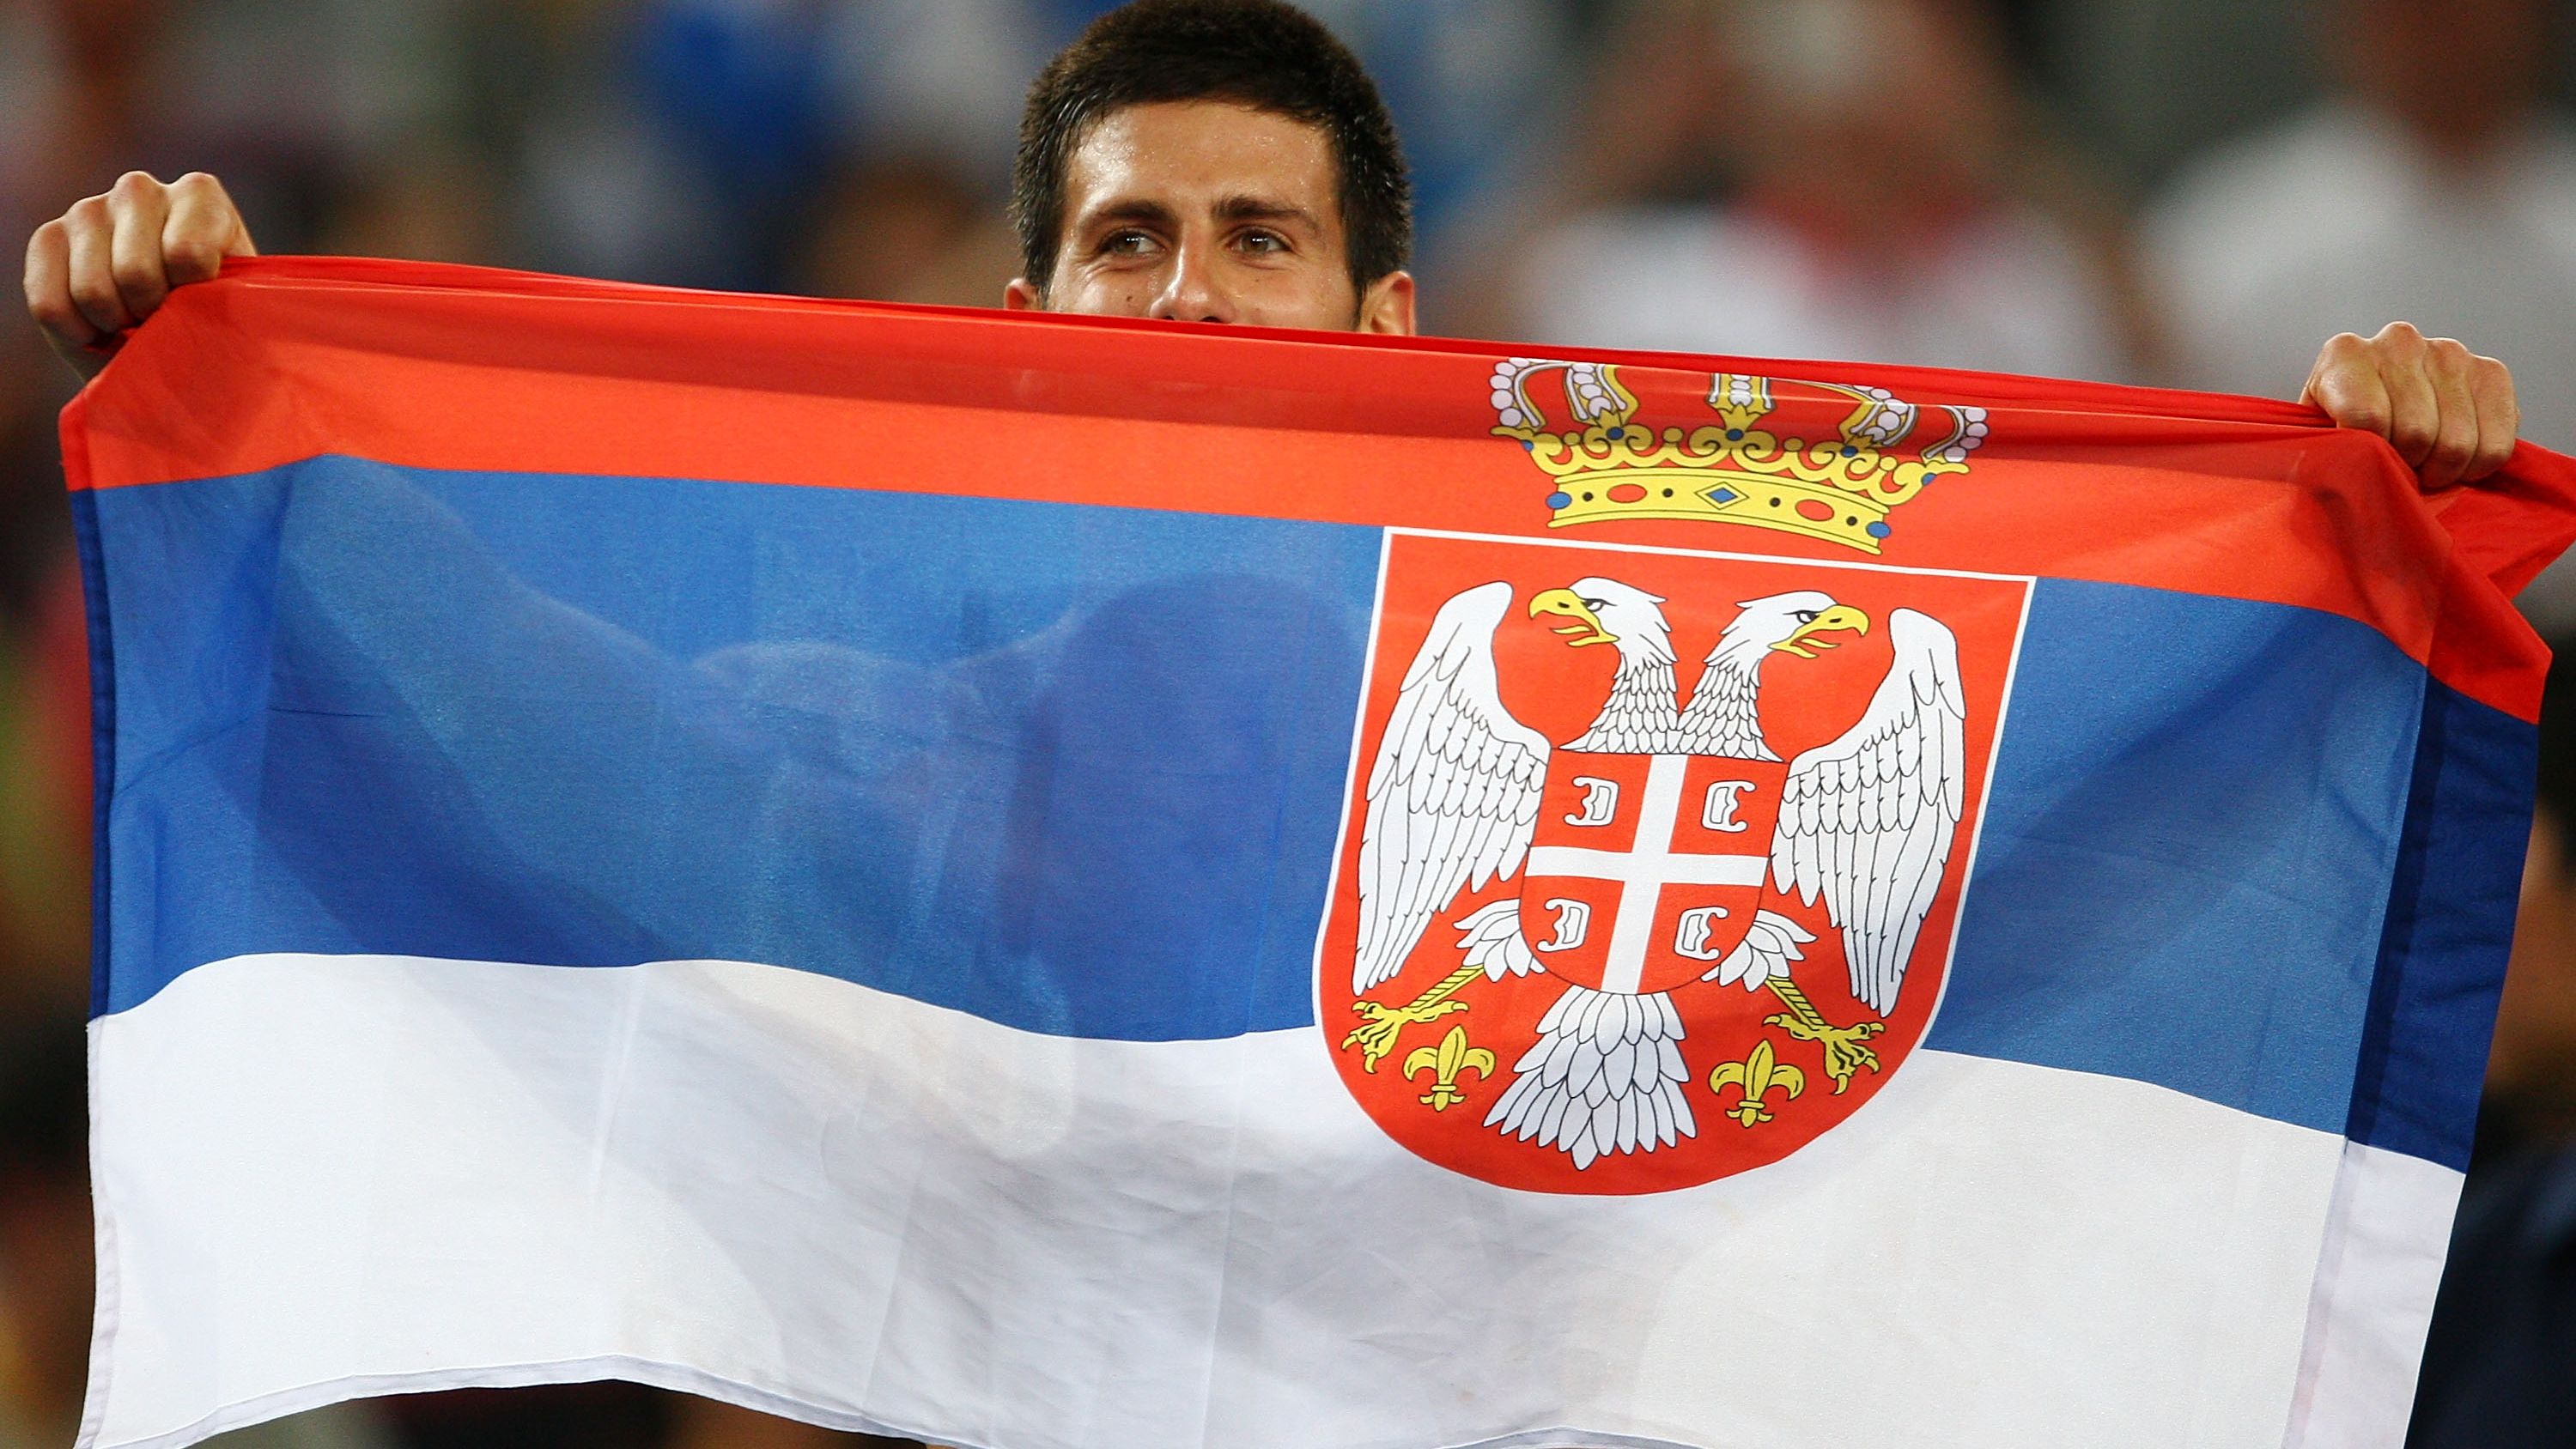 Novak case blamed on anti-Serb 'conspiracy'